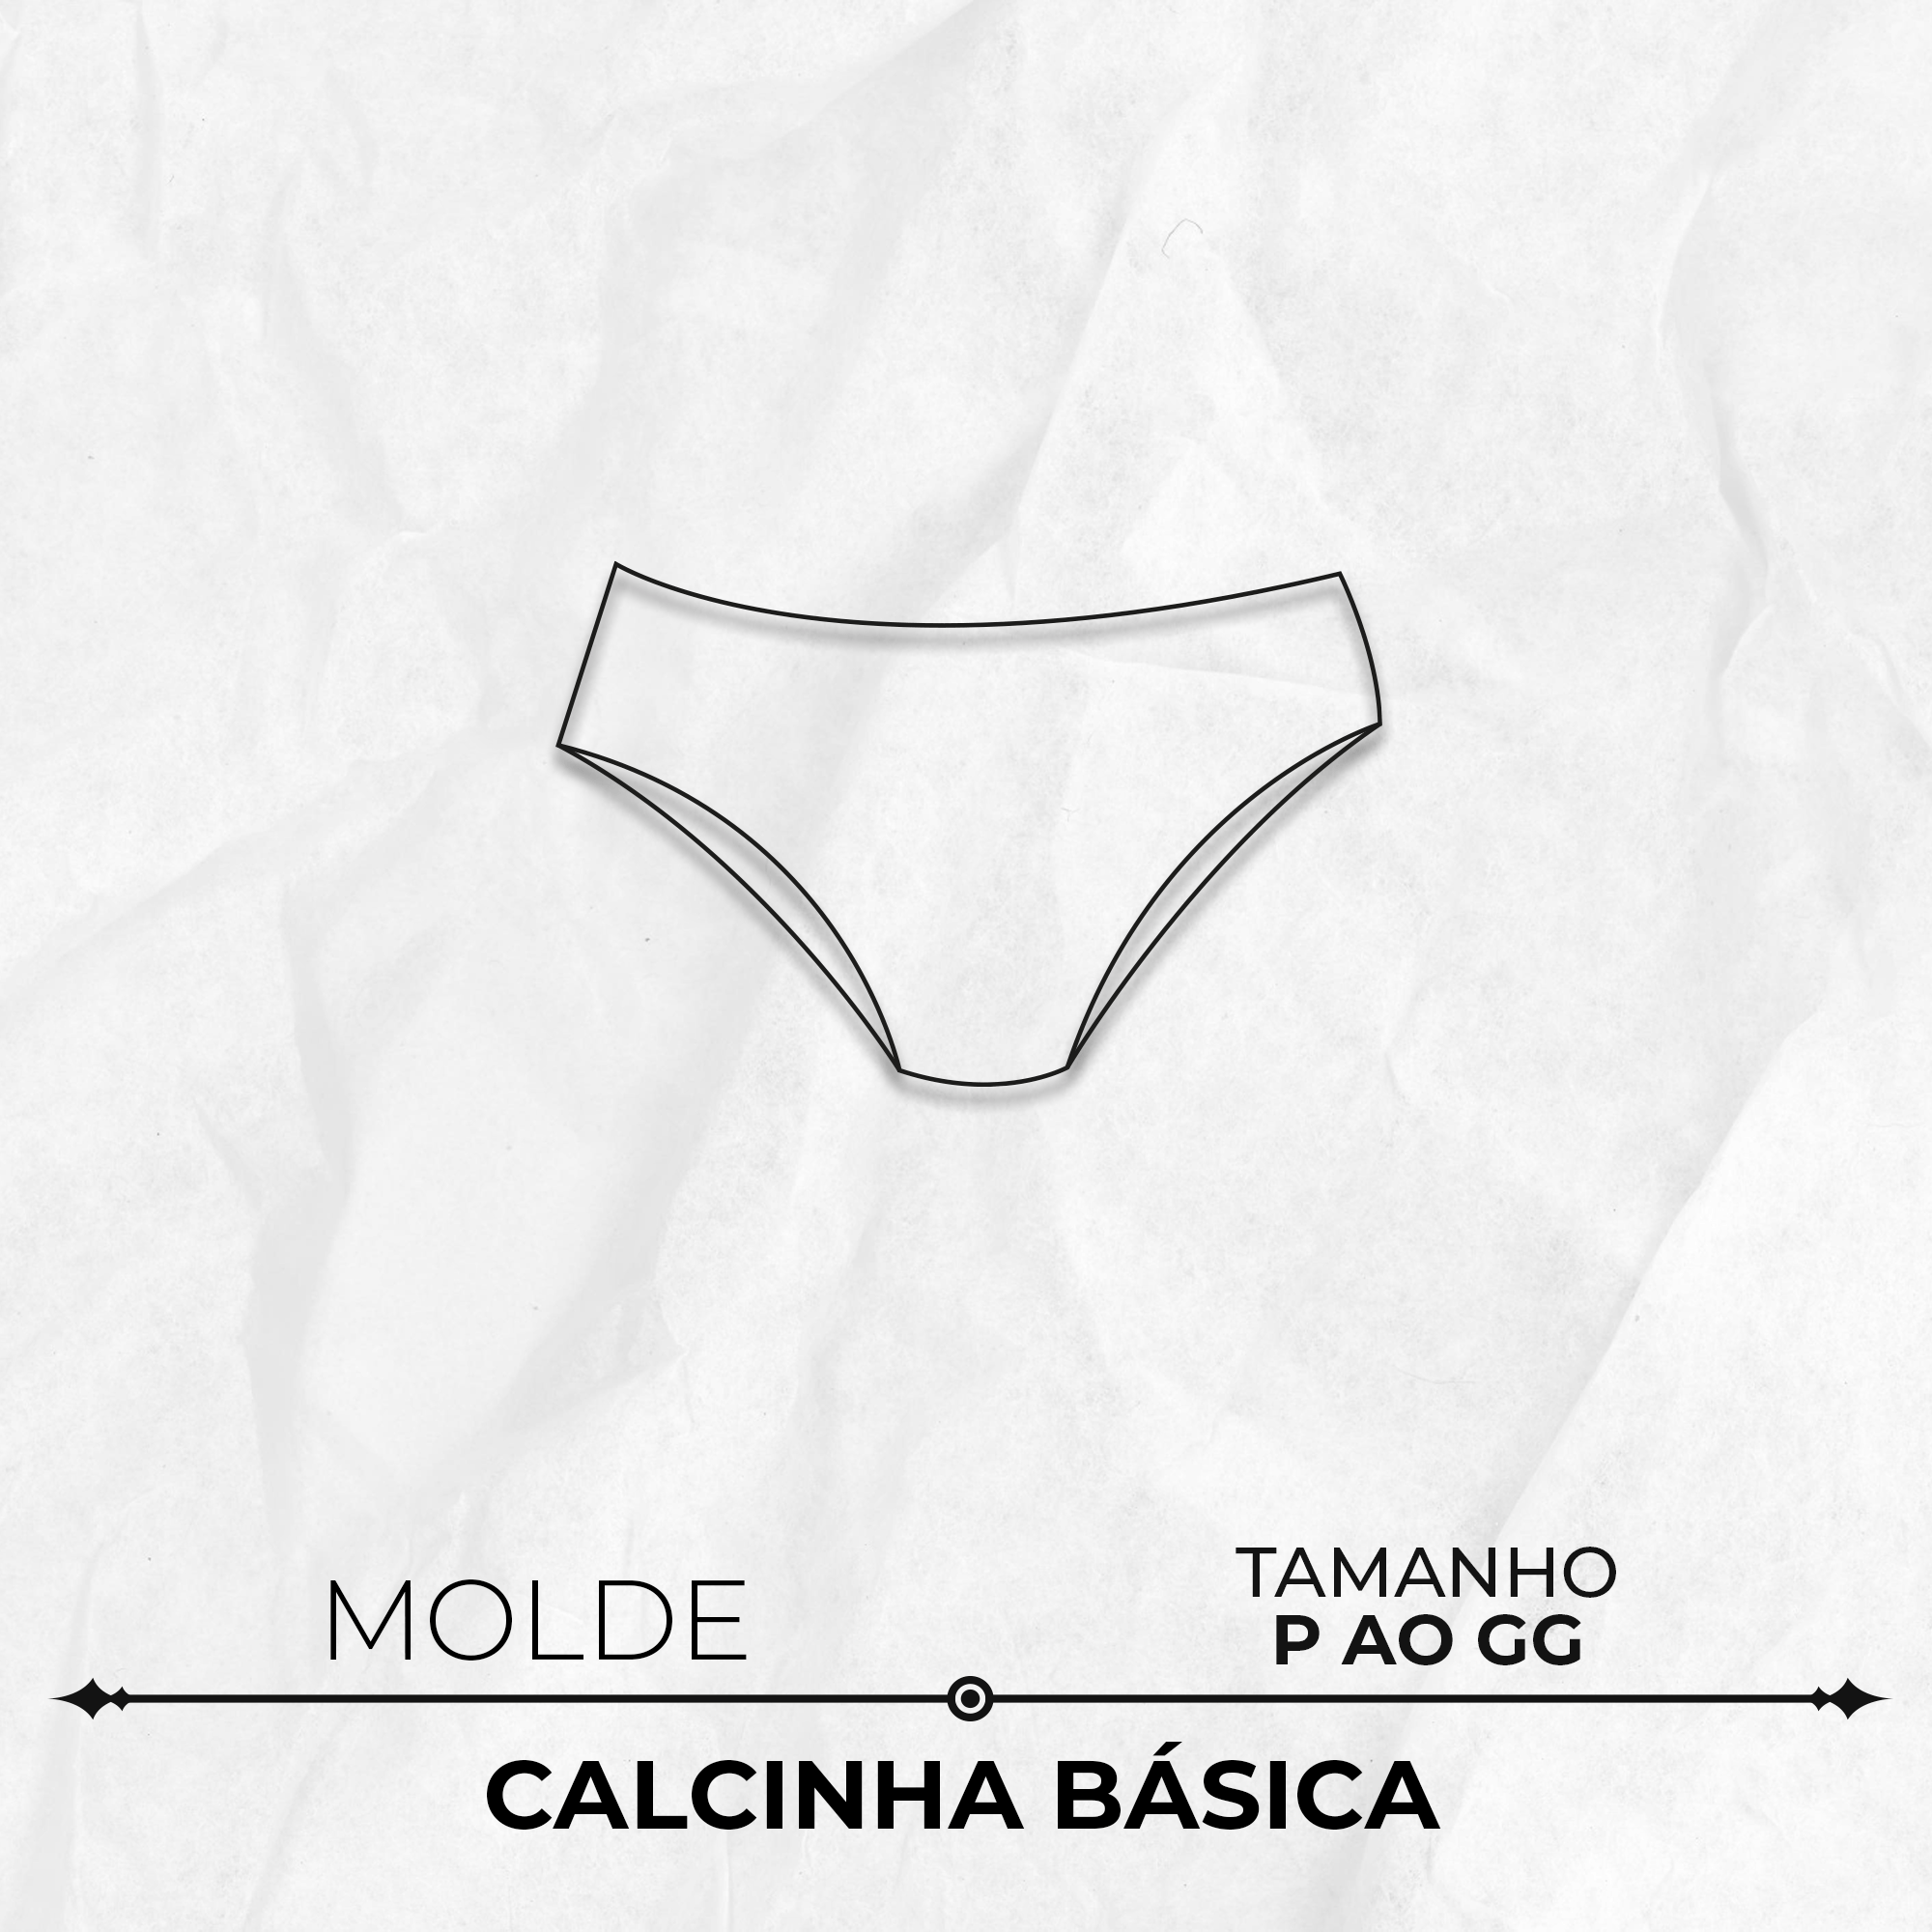 Molde lingerie calcinha básica by Marlene Mukai